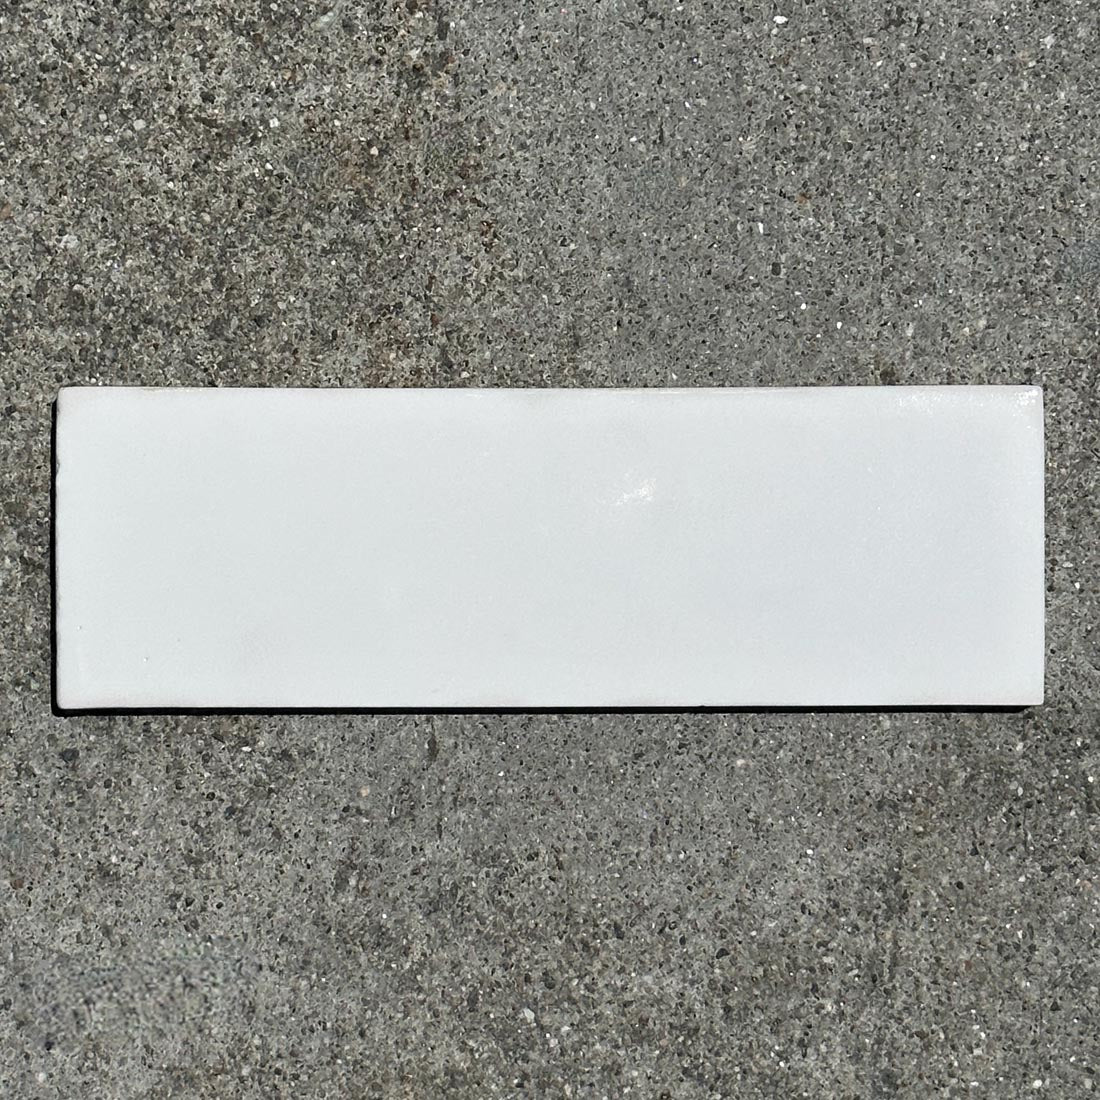 WOW Design | Bejmat White Gloss 2x6 Tiles